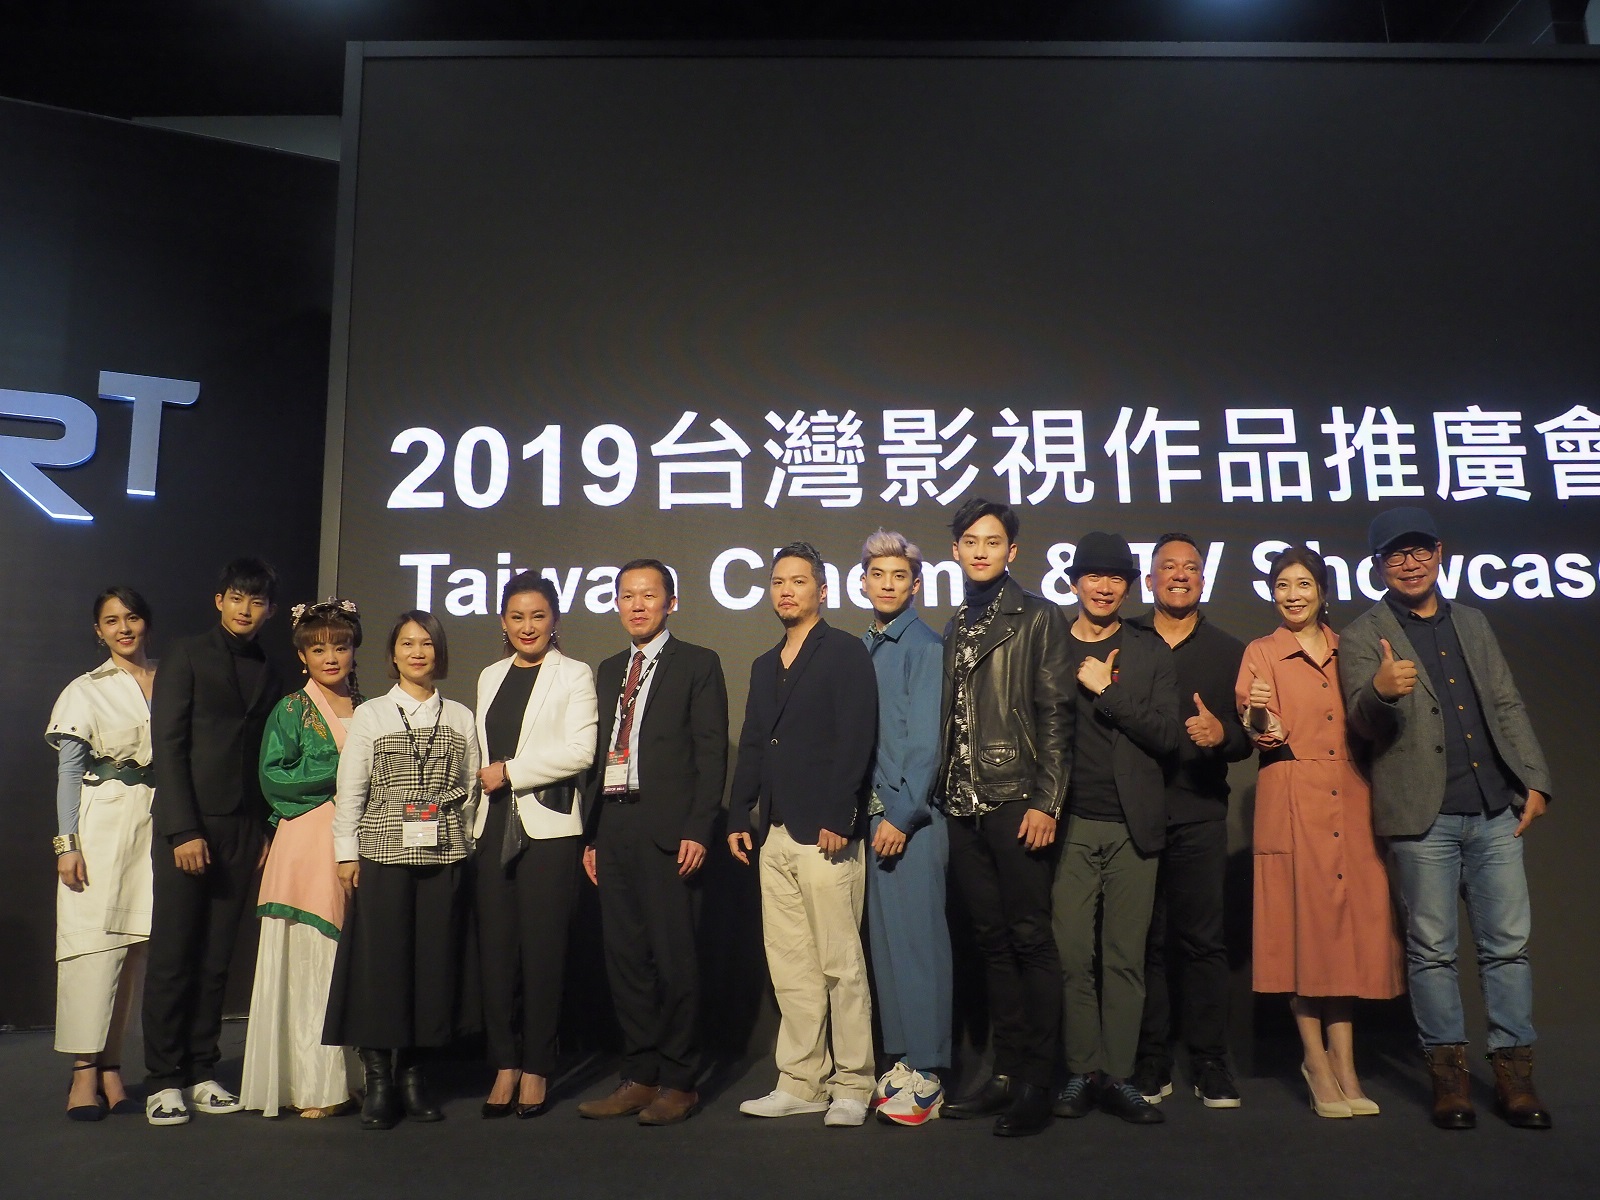 2019 Hong Kong International Film & TV Market (FILMART)- Taiwan Cinema and TV Showcase: New Contents and Big Starring Gathered